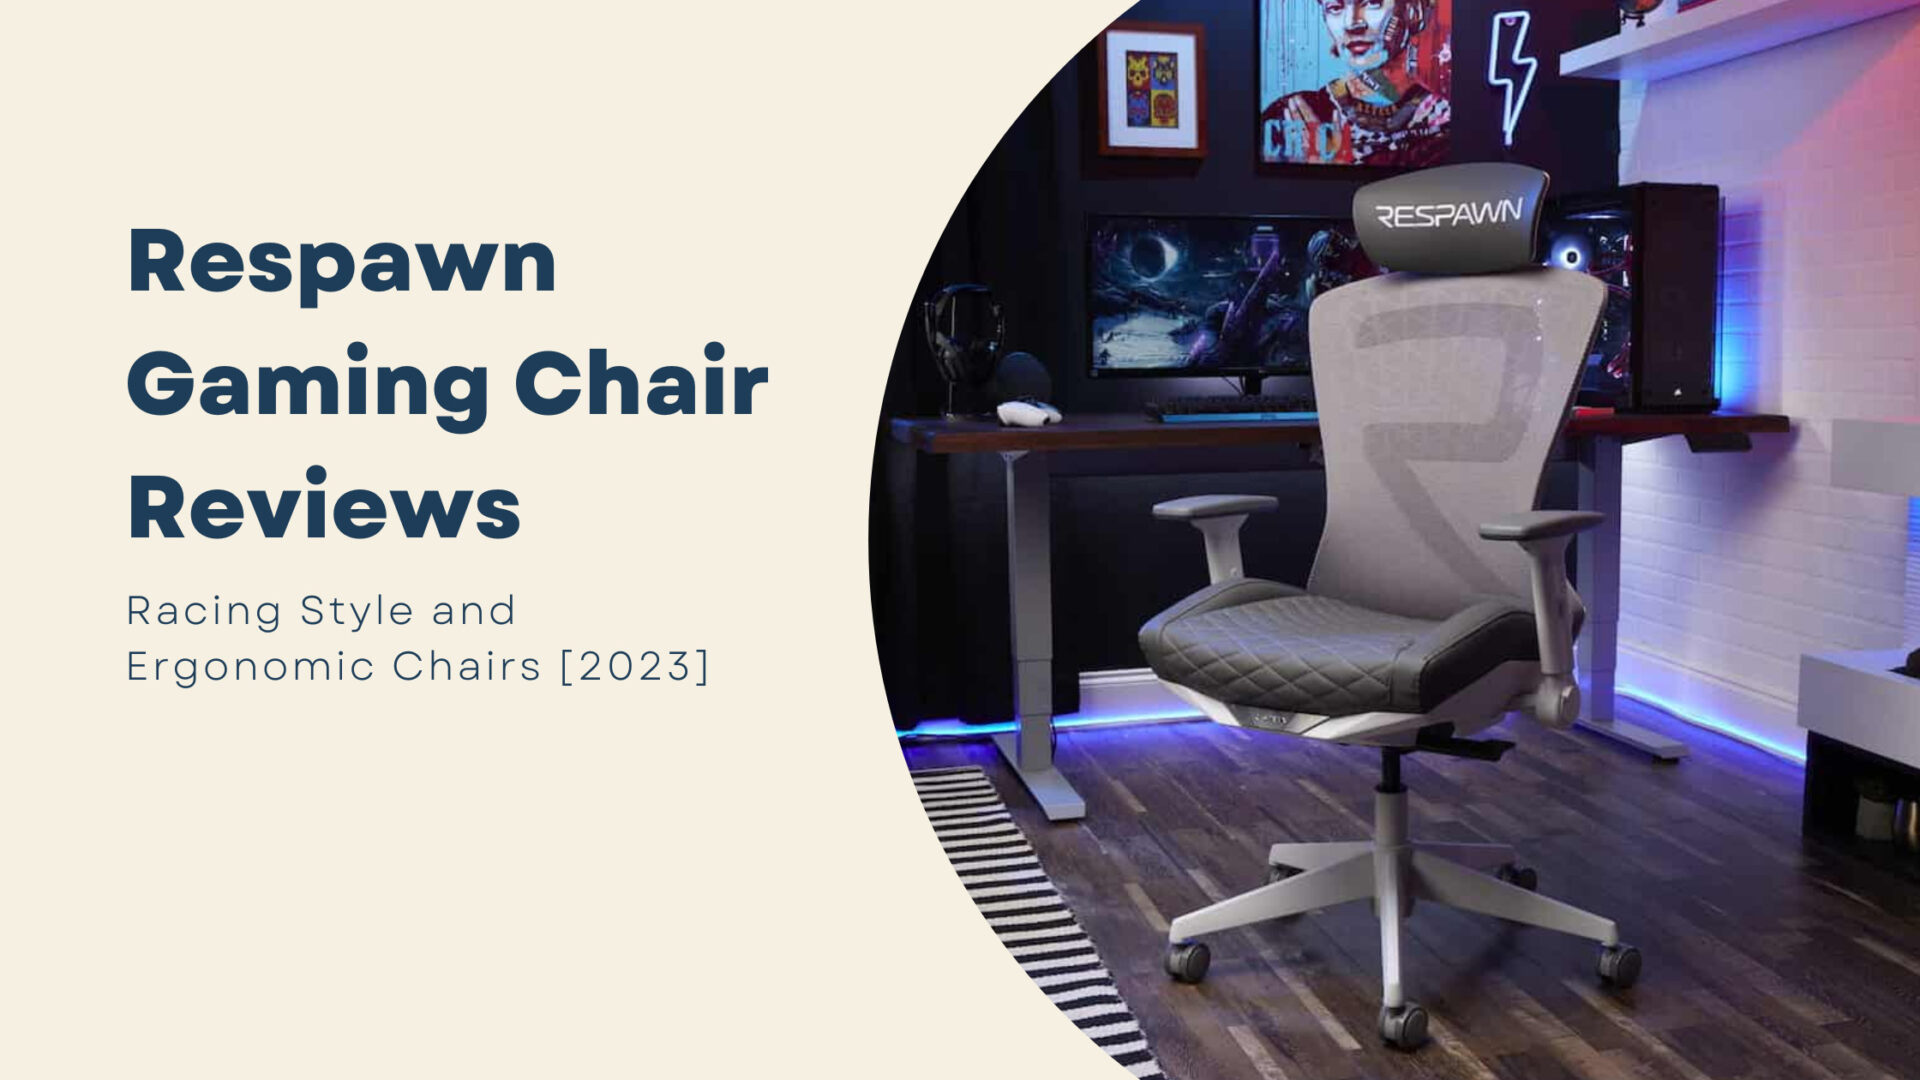 Respawn Gaming Chair Reviews